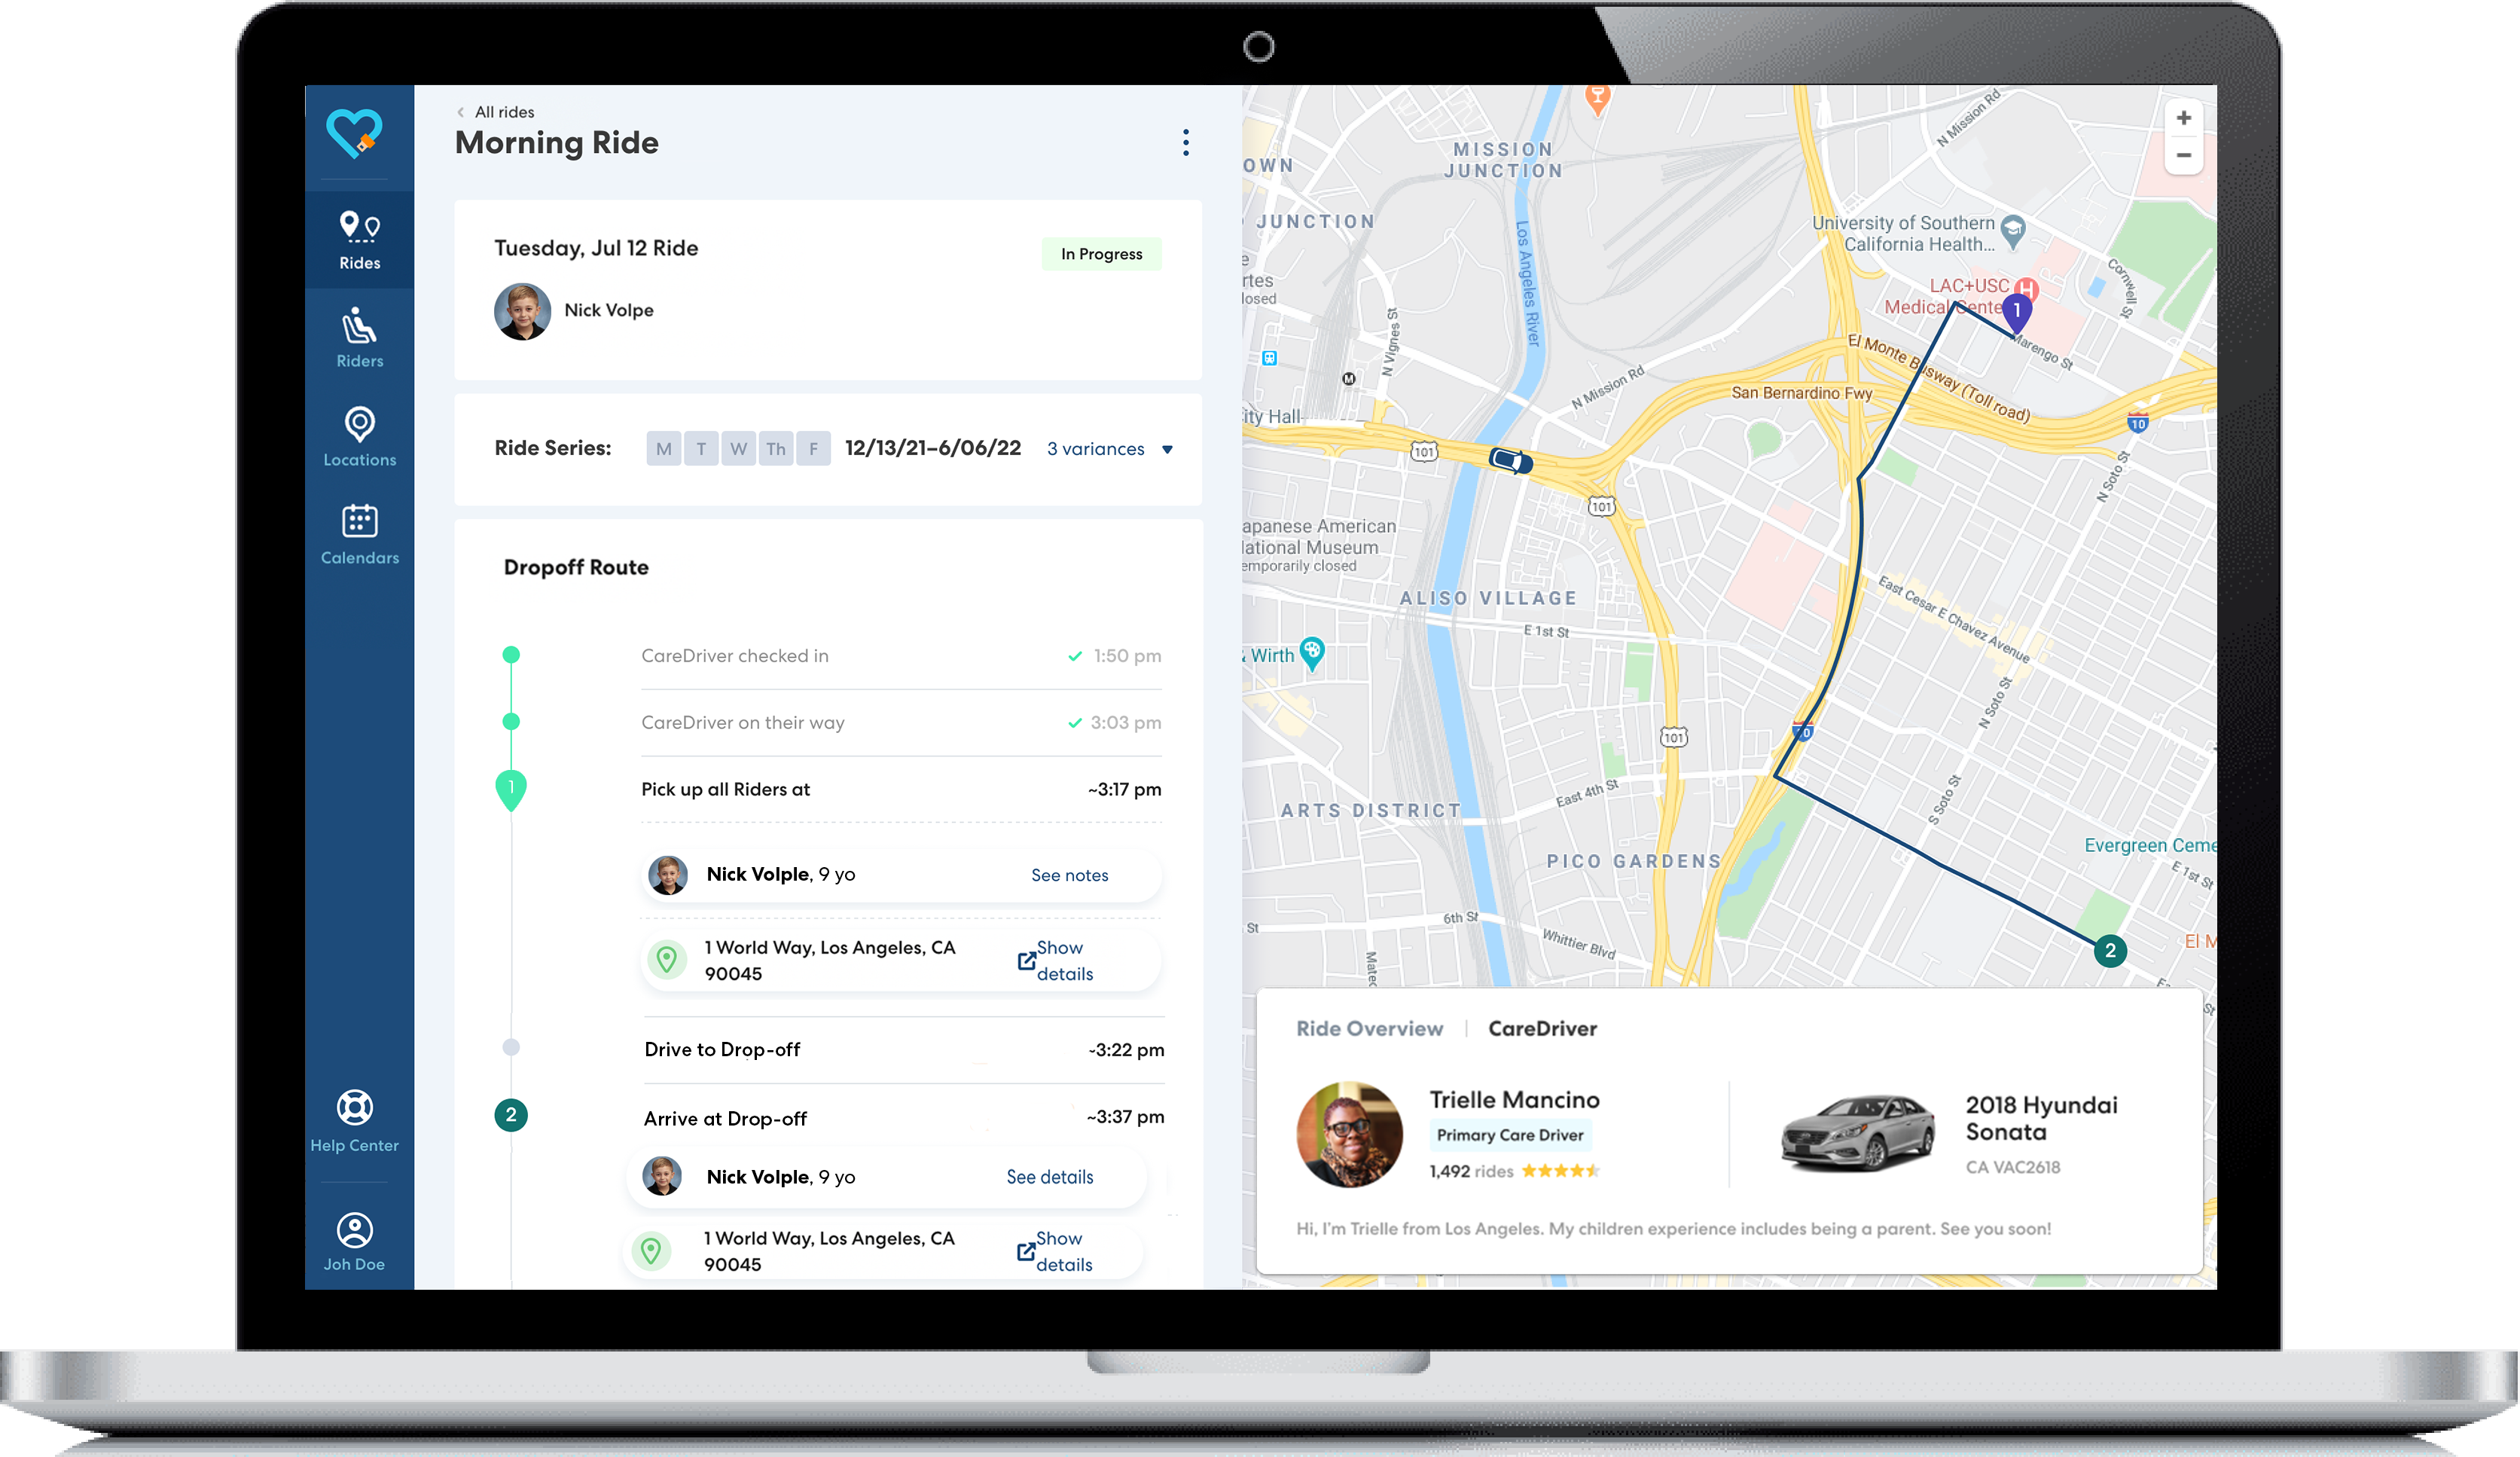 HopSkipDrive transparency with GPS RideIQ